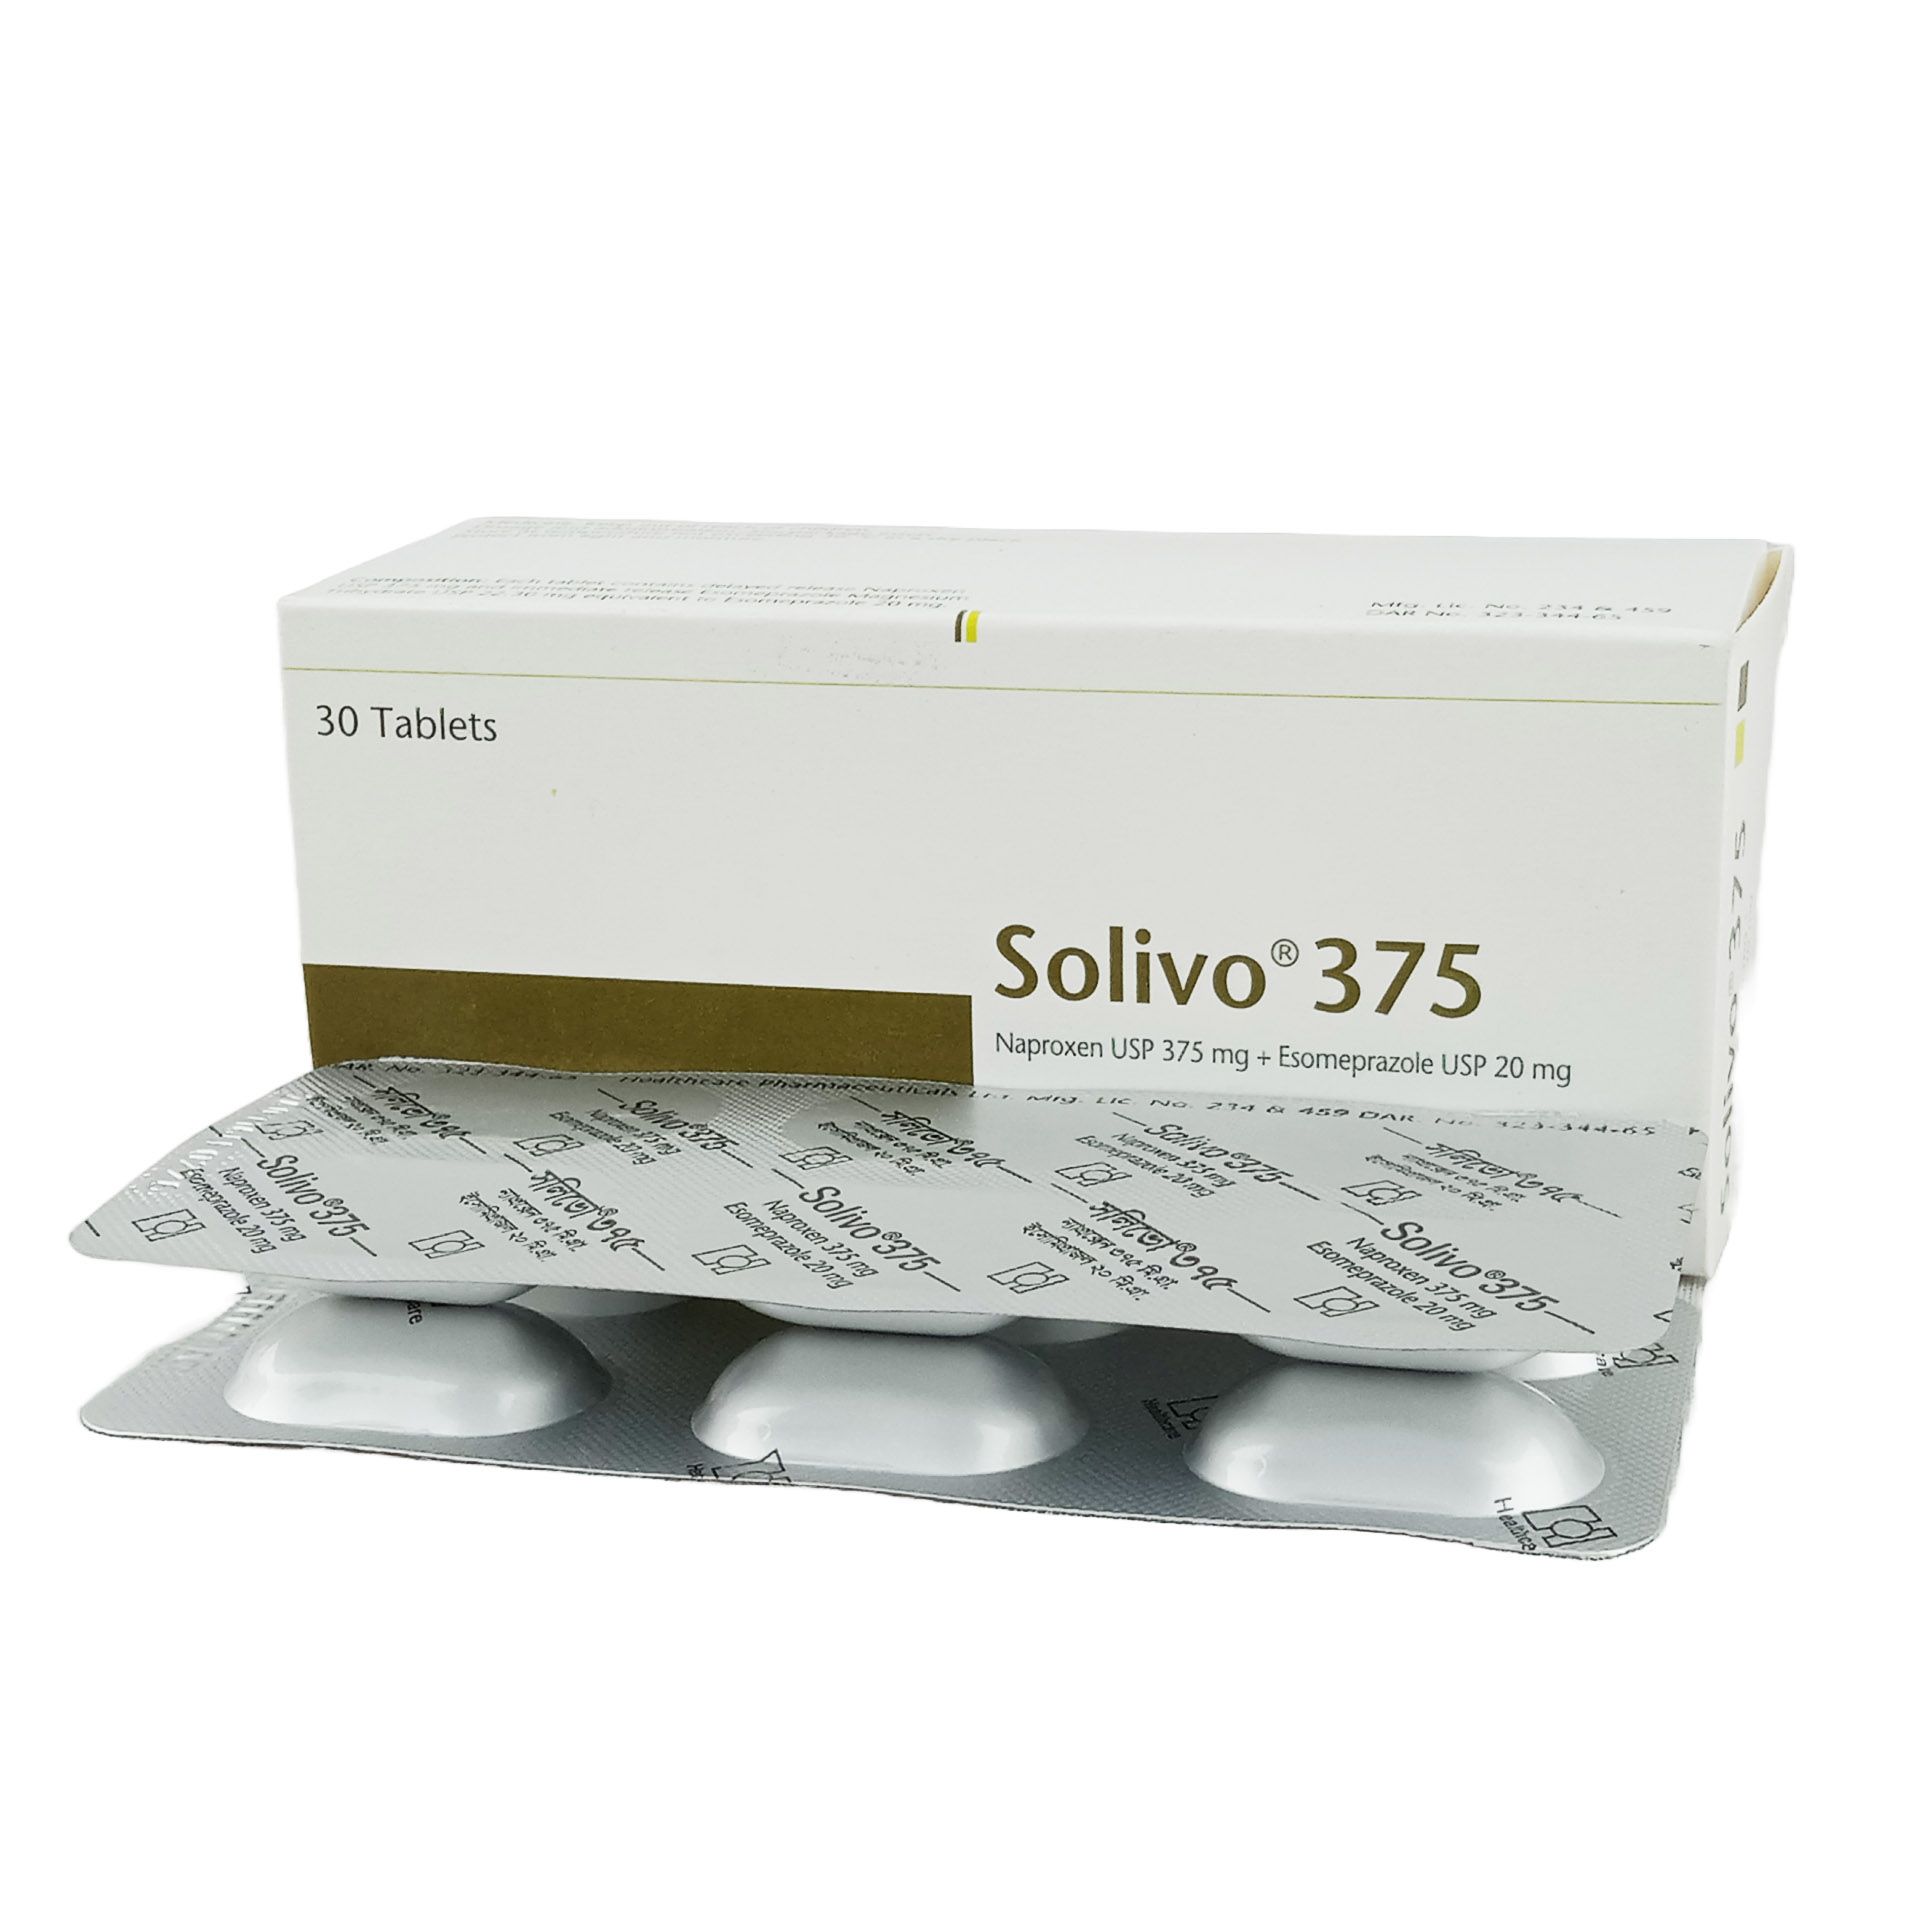 Solivo 375 20mg+375mg Tablet